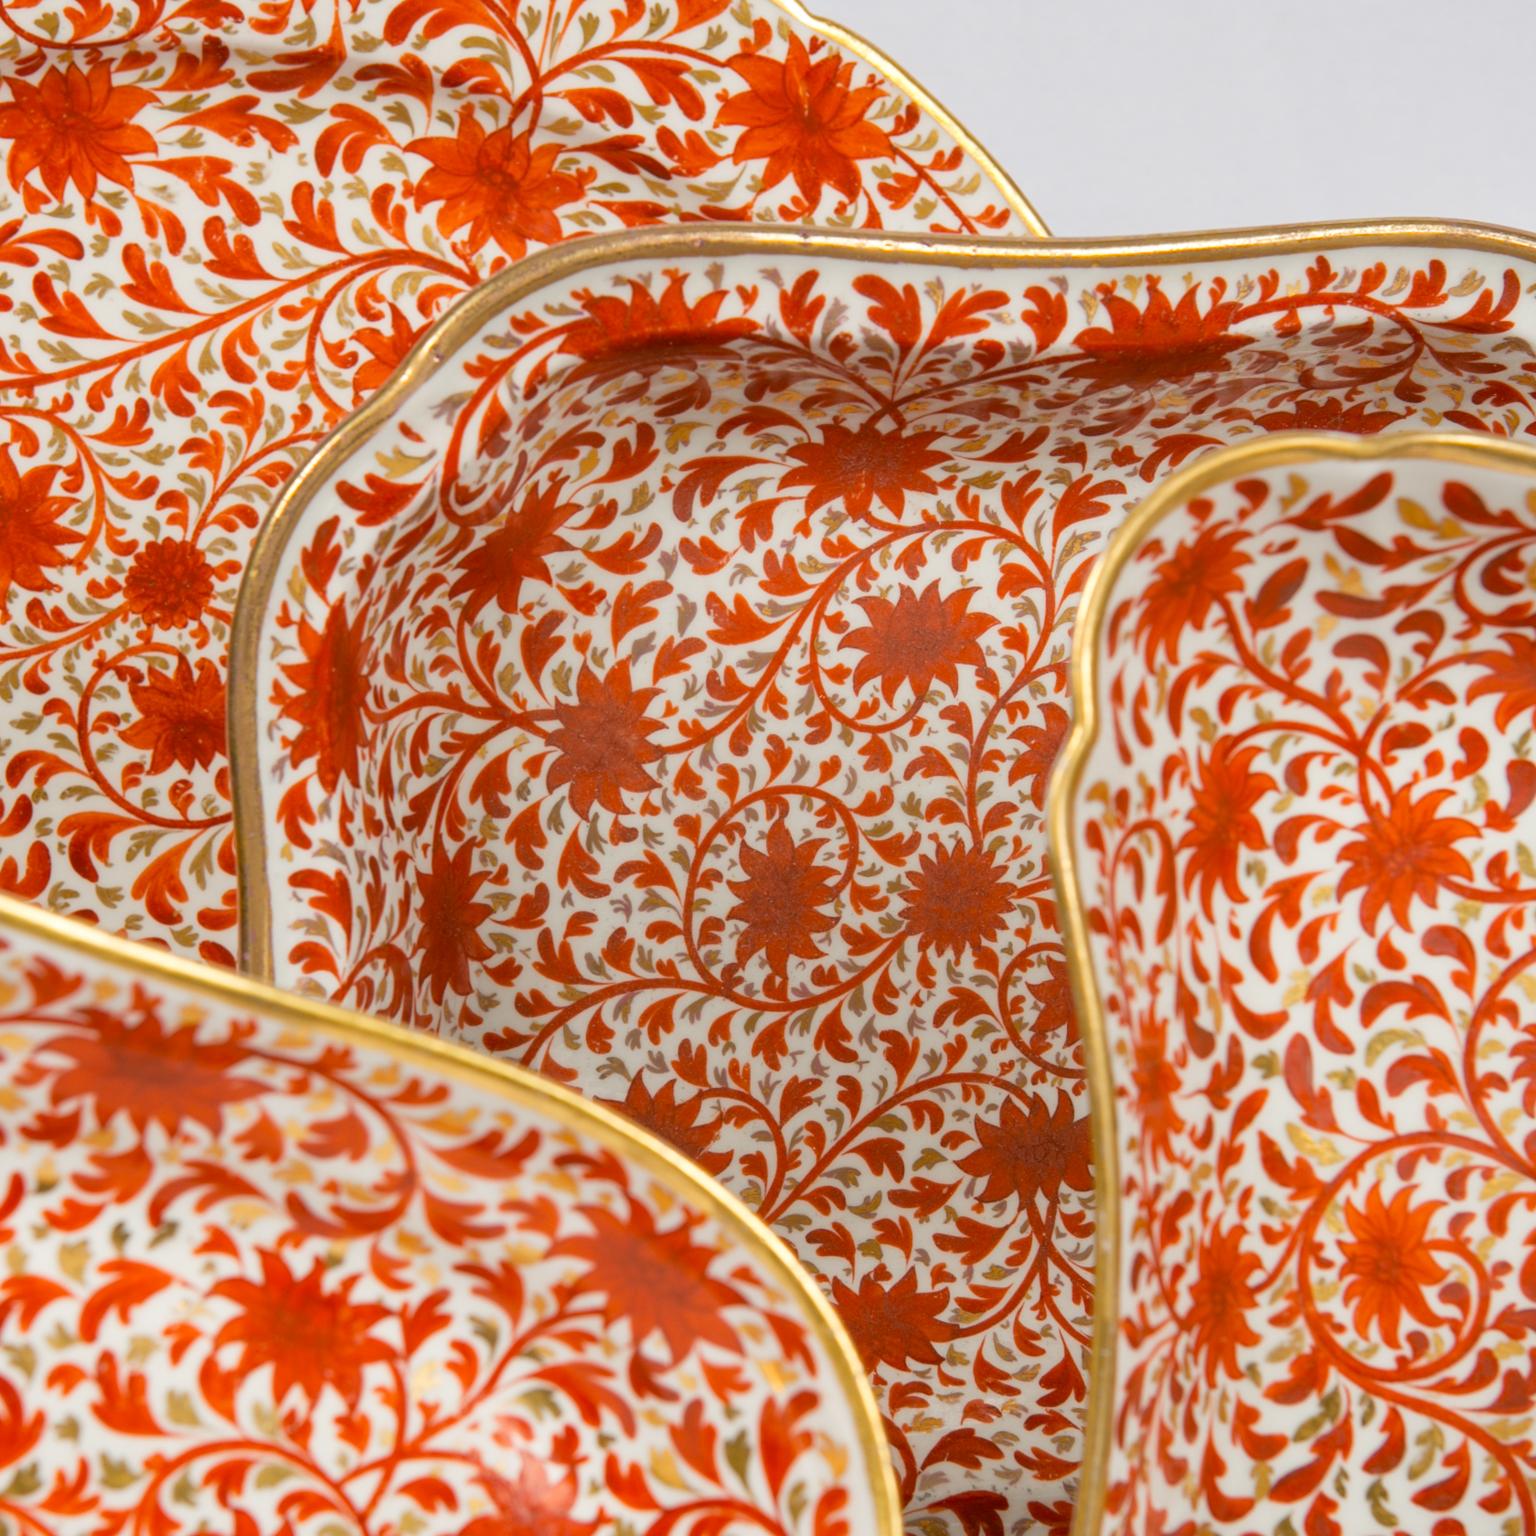 Regency Set Antique Porcelain Dishes in Coalport's Red Chrysanthemum Pattern circa 1810